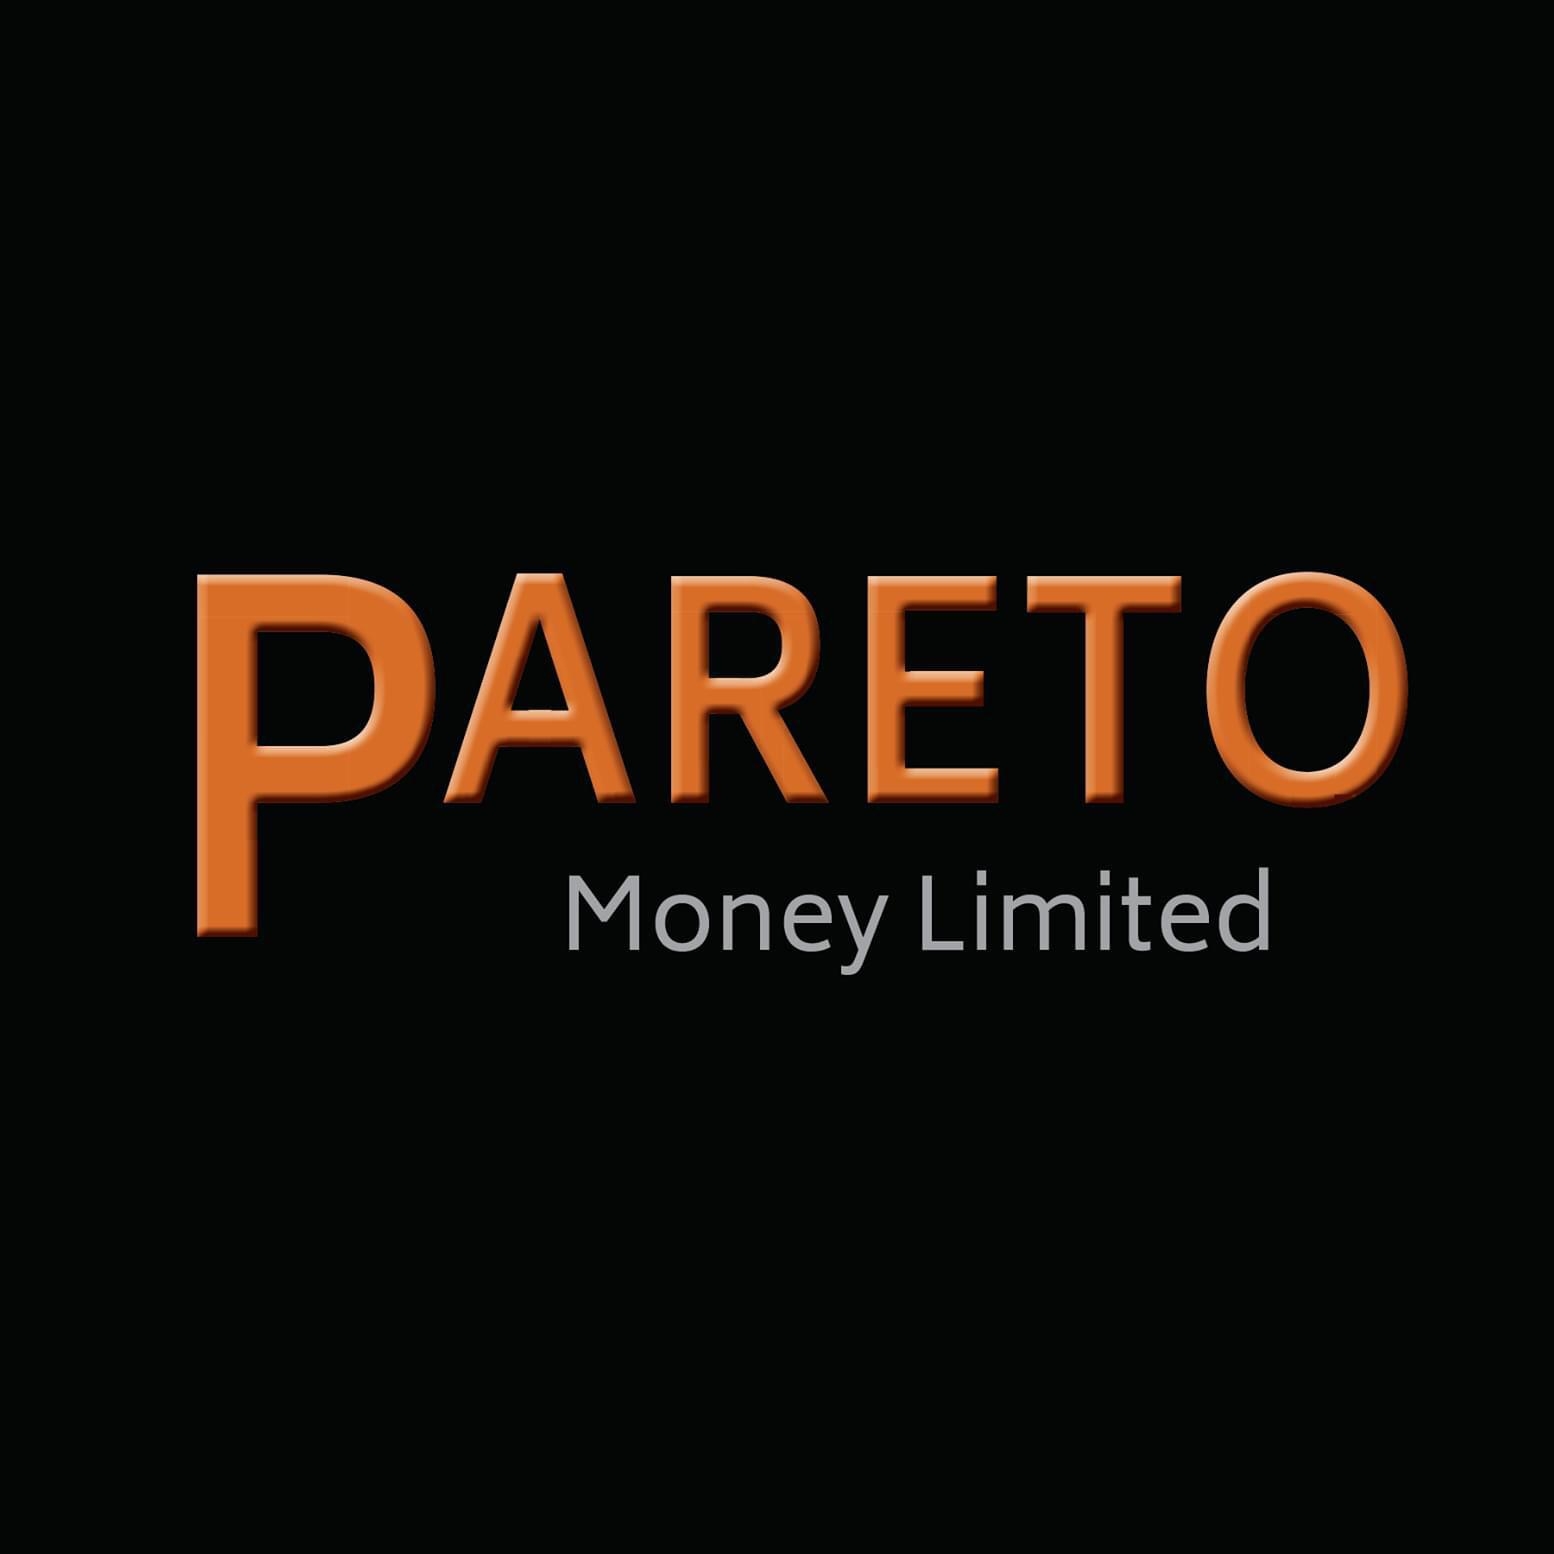 Pareto Money Limited 04